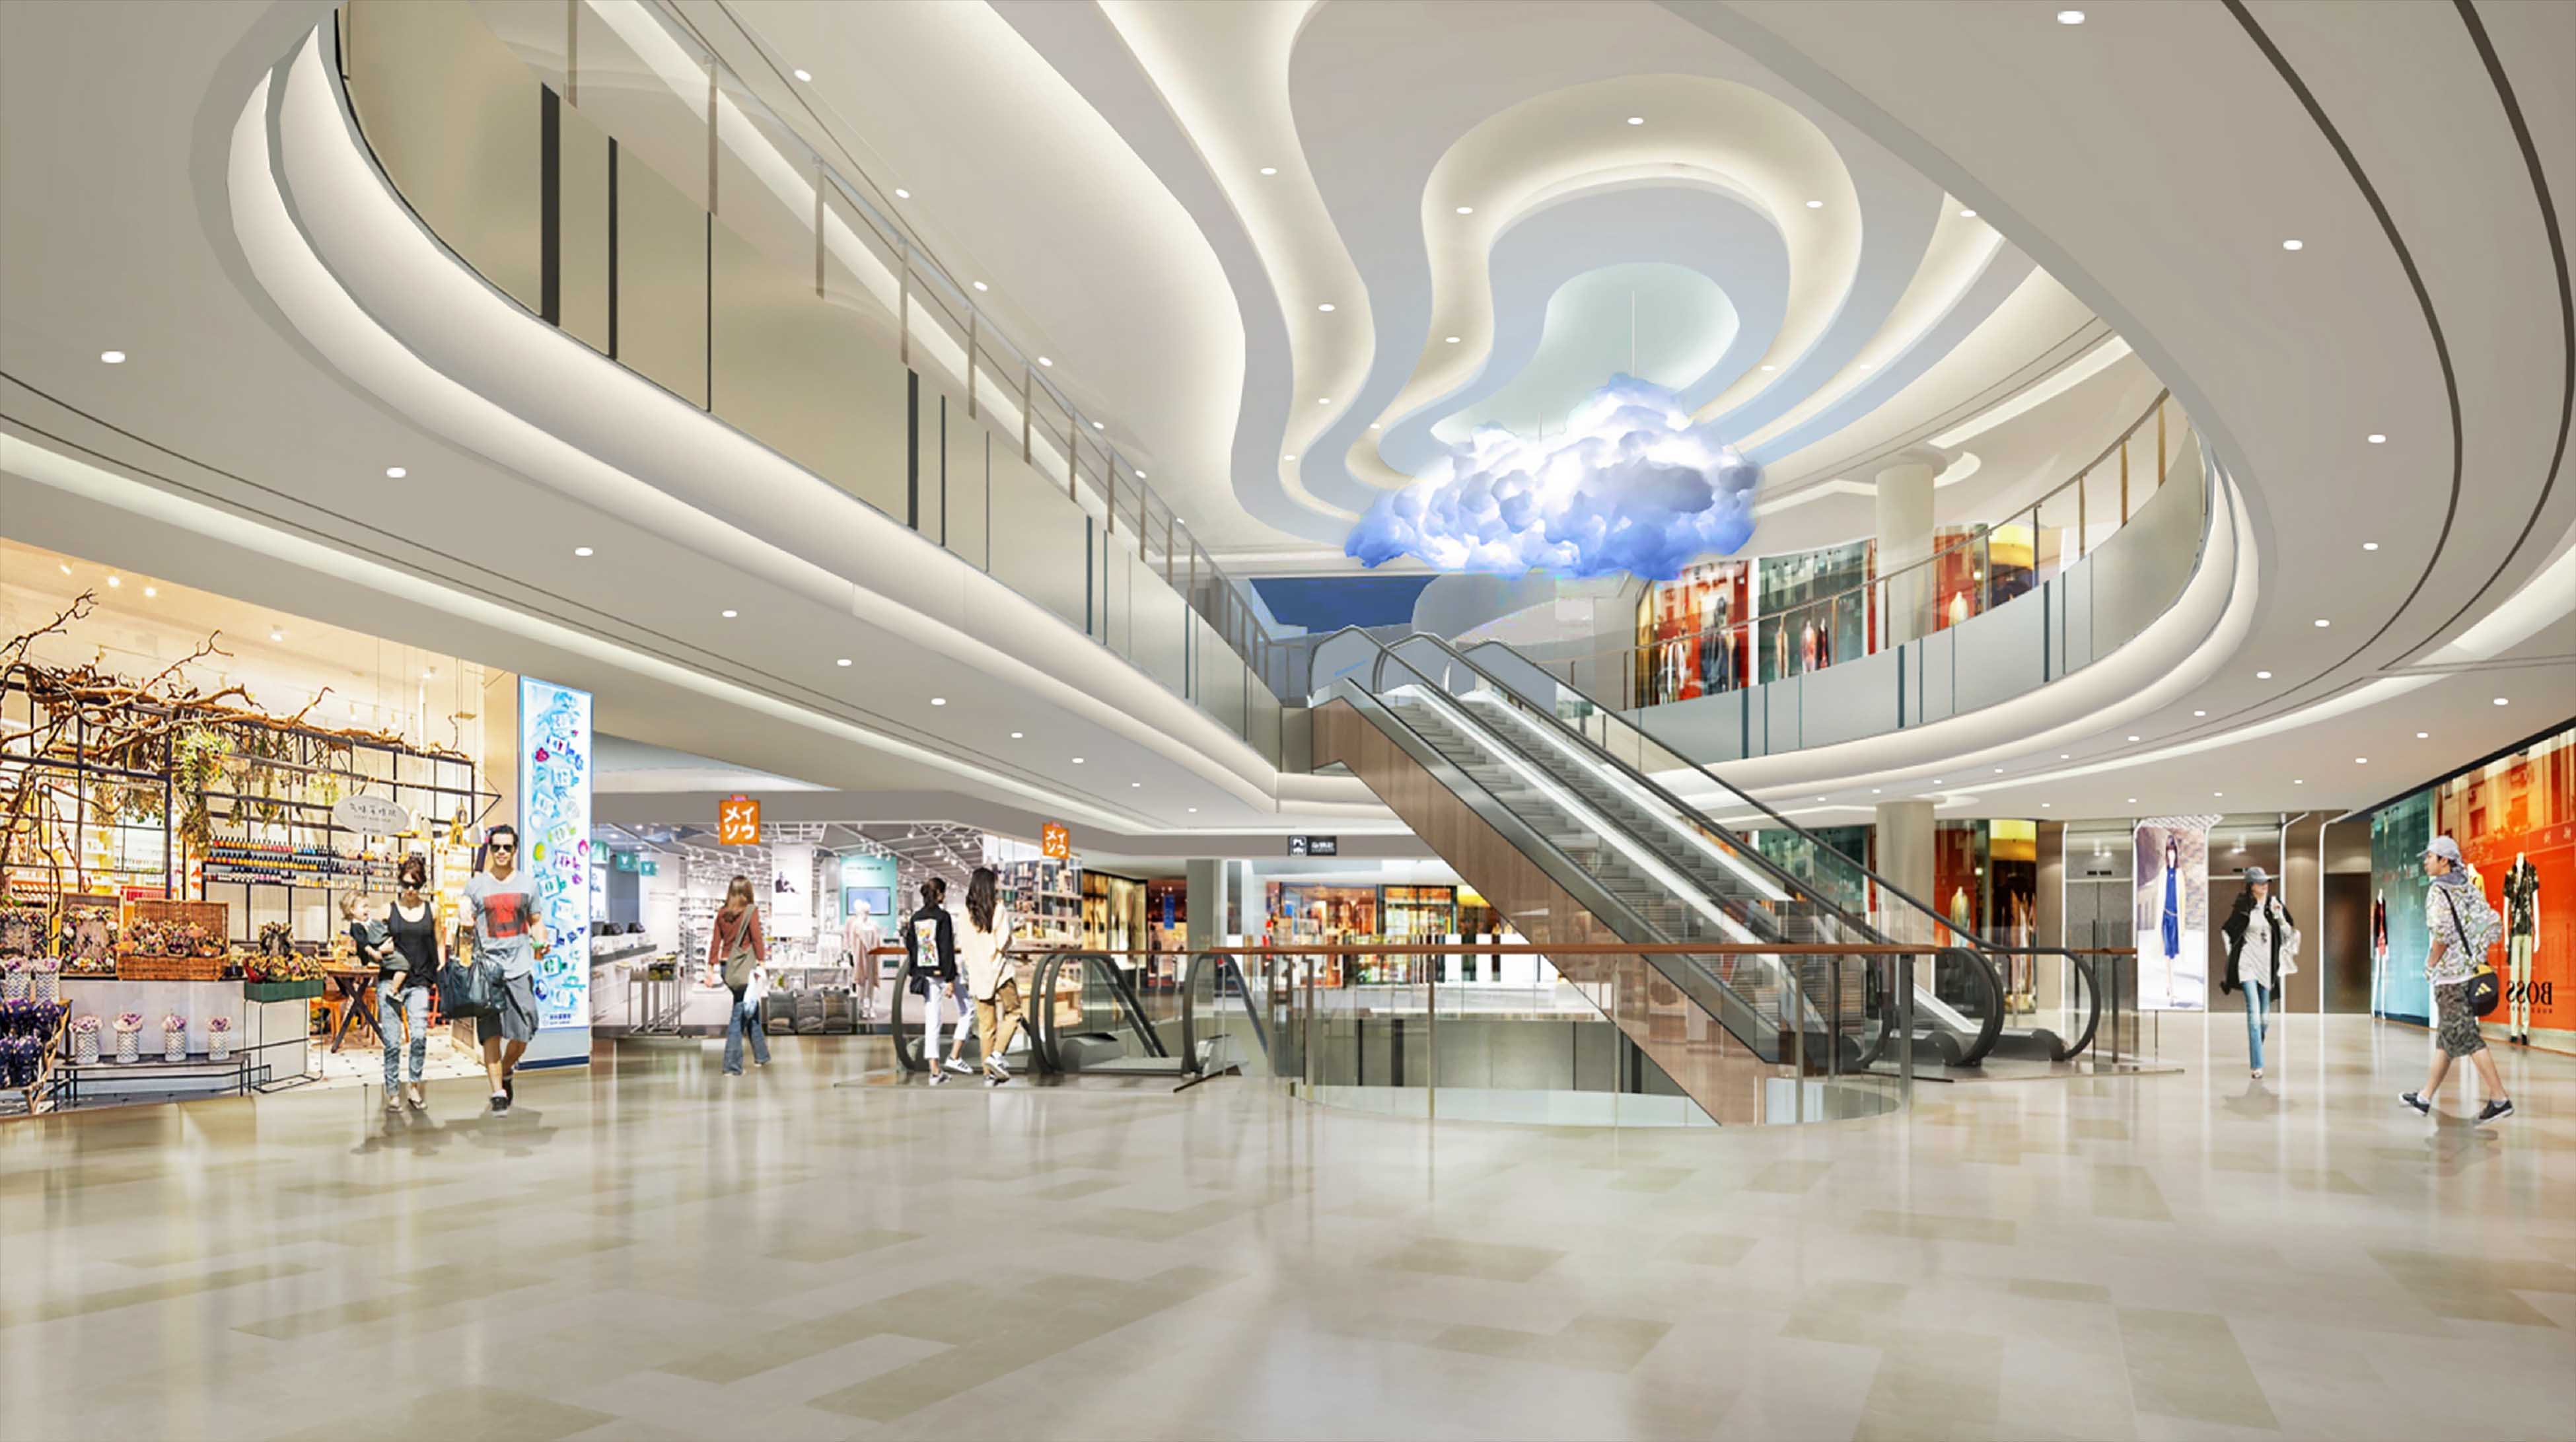 Lighting design of large shopping malls